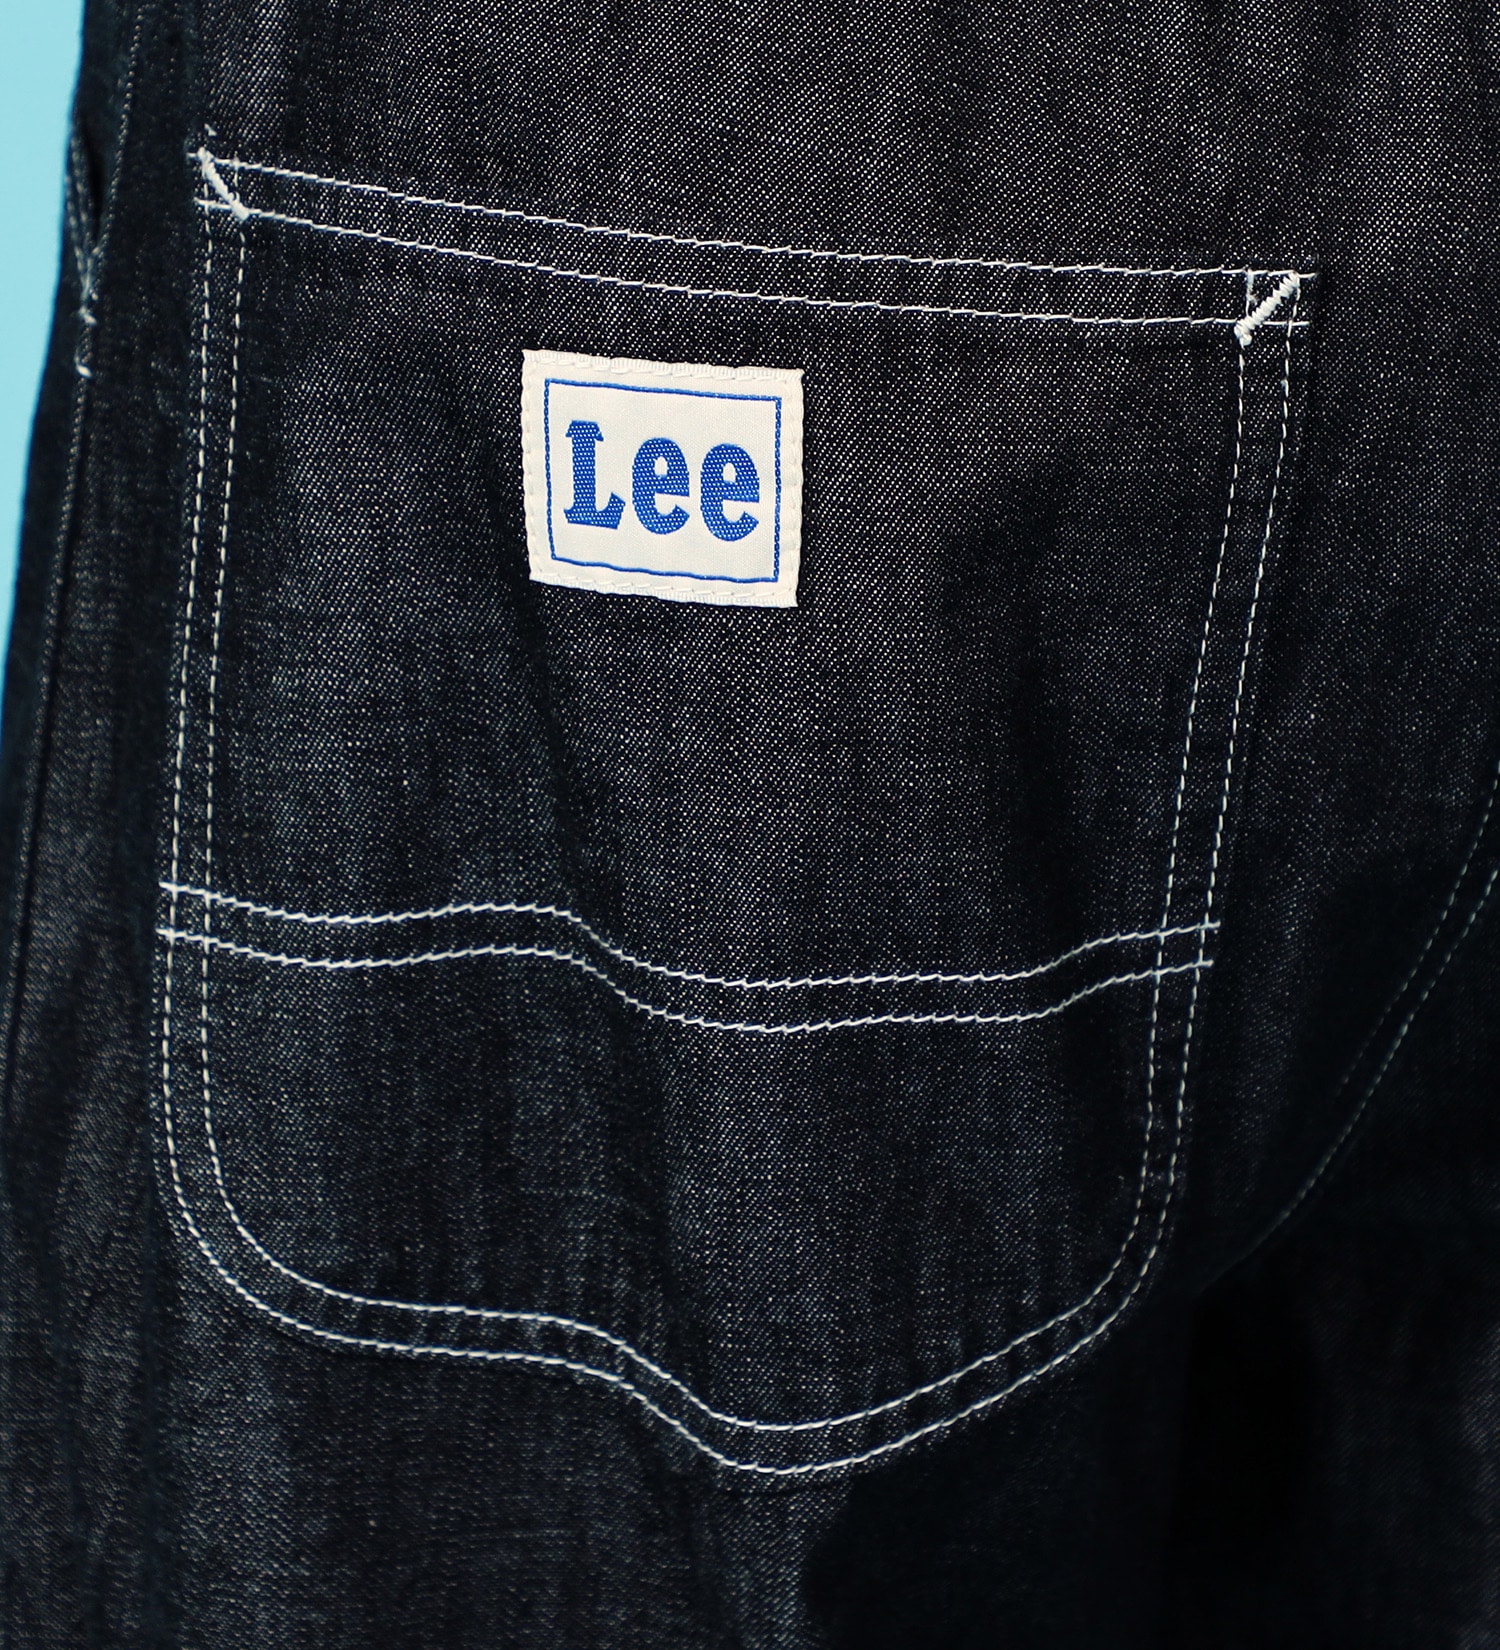 Lee(リー)の【涼】快適素材 ベーカーイージーパンツ|パンツ/デニムパンツ/メンズ|ブラック